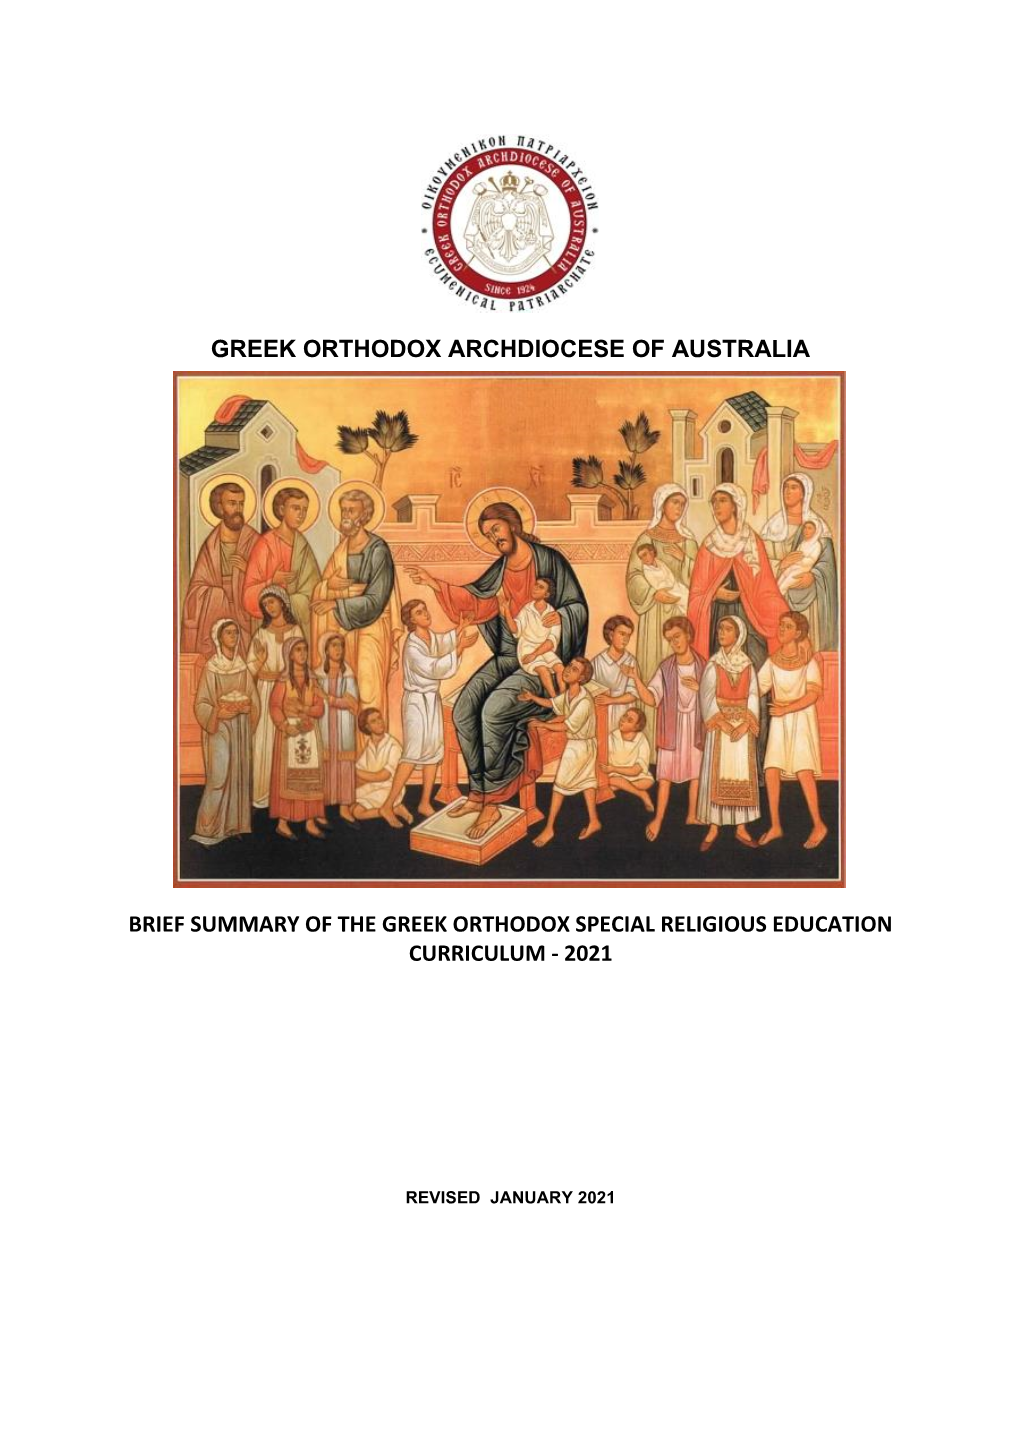 Go5 2021 Summary of Greek Orthodox Scripture Program and Calendar